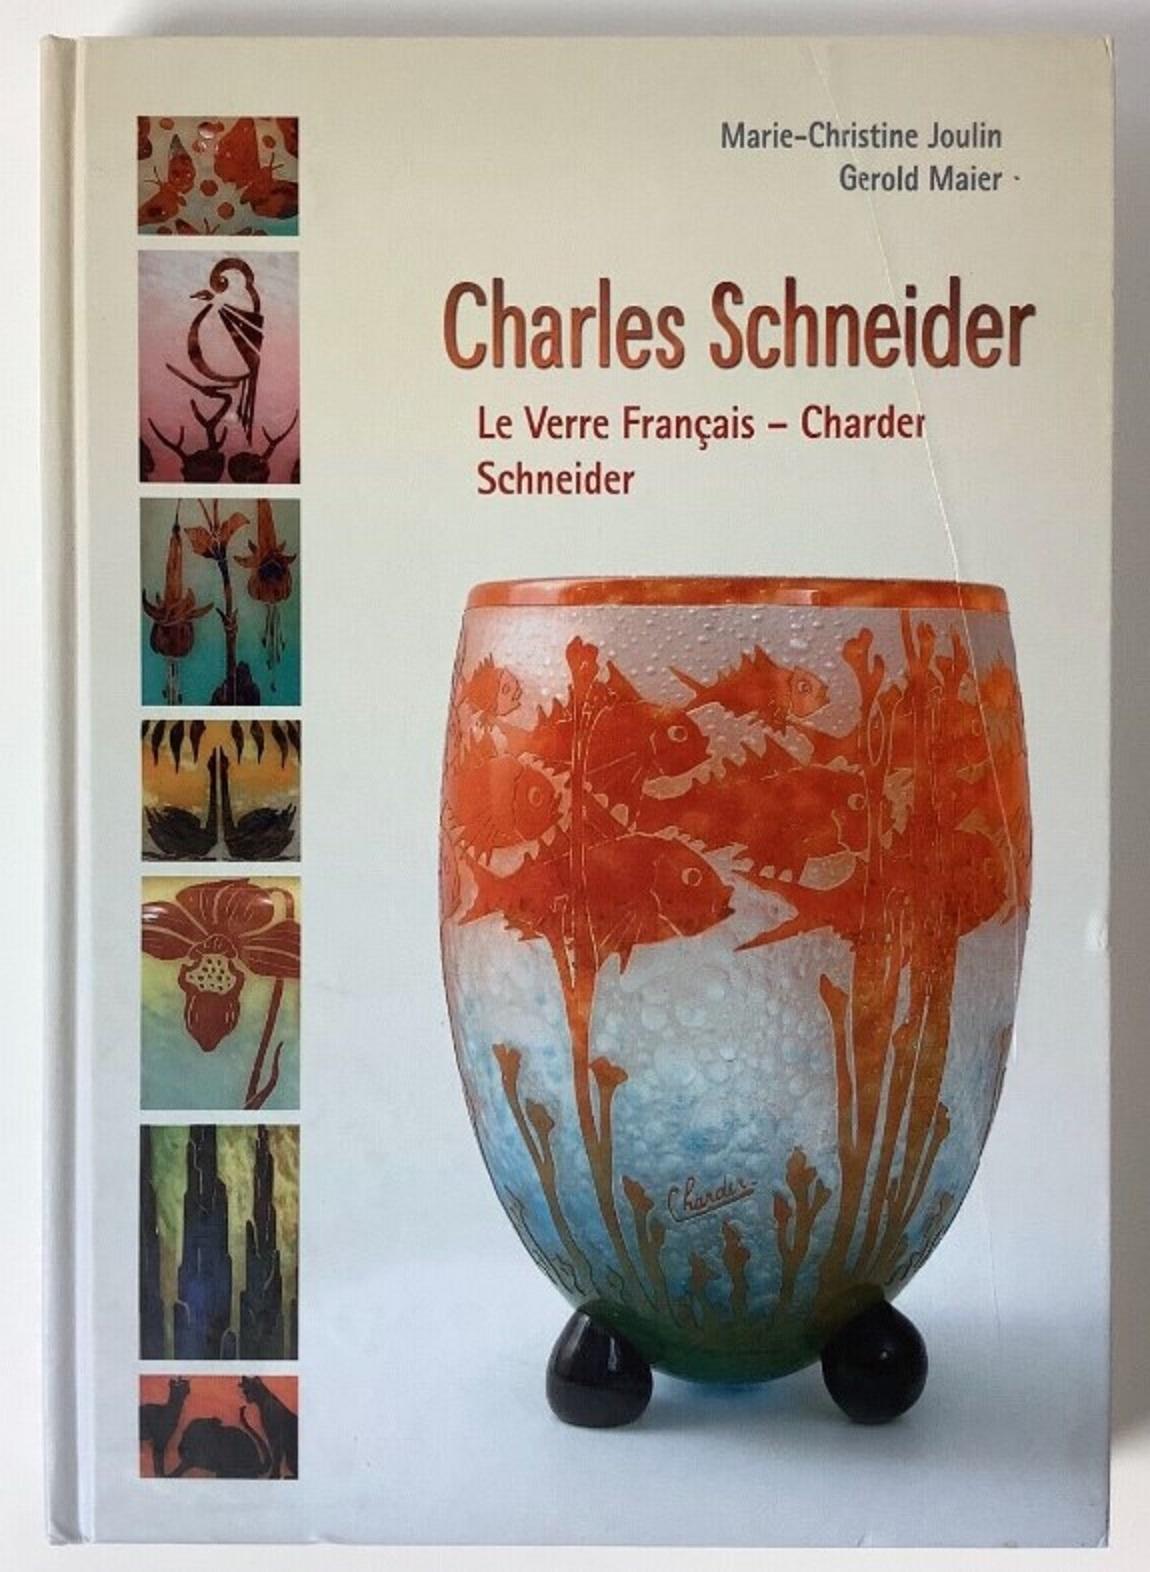 Vase Sign: Schneider
Schneider
Charles Schneider (1881-1953) studied art in two of most prestigious French school of the Arts. First in the School of Fine Arts in Nancy, then in the elite Ecole des Beaux Arts in Paris. While at Nancy, Charles became